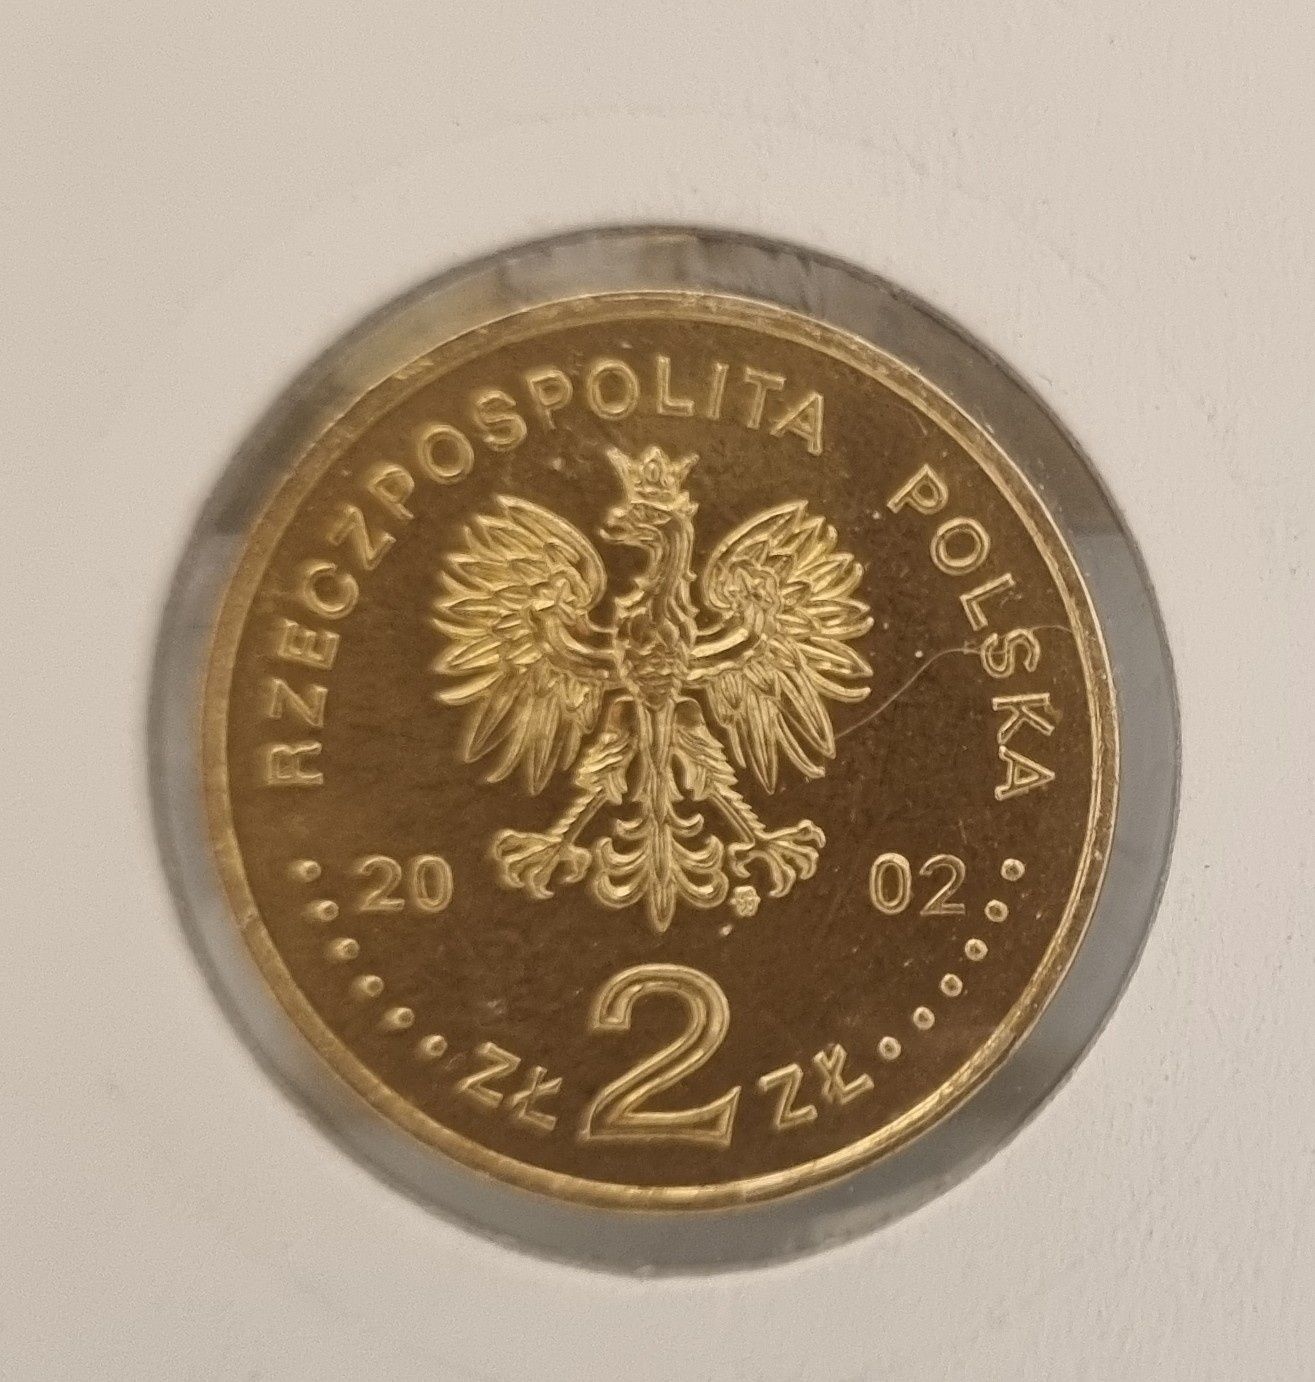 Stare monety / moneta 2 zł NG 2002 r. Augu